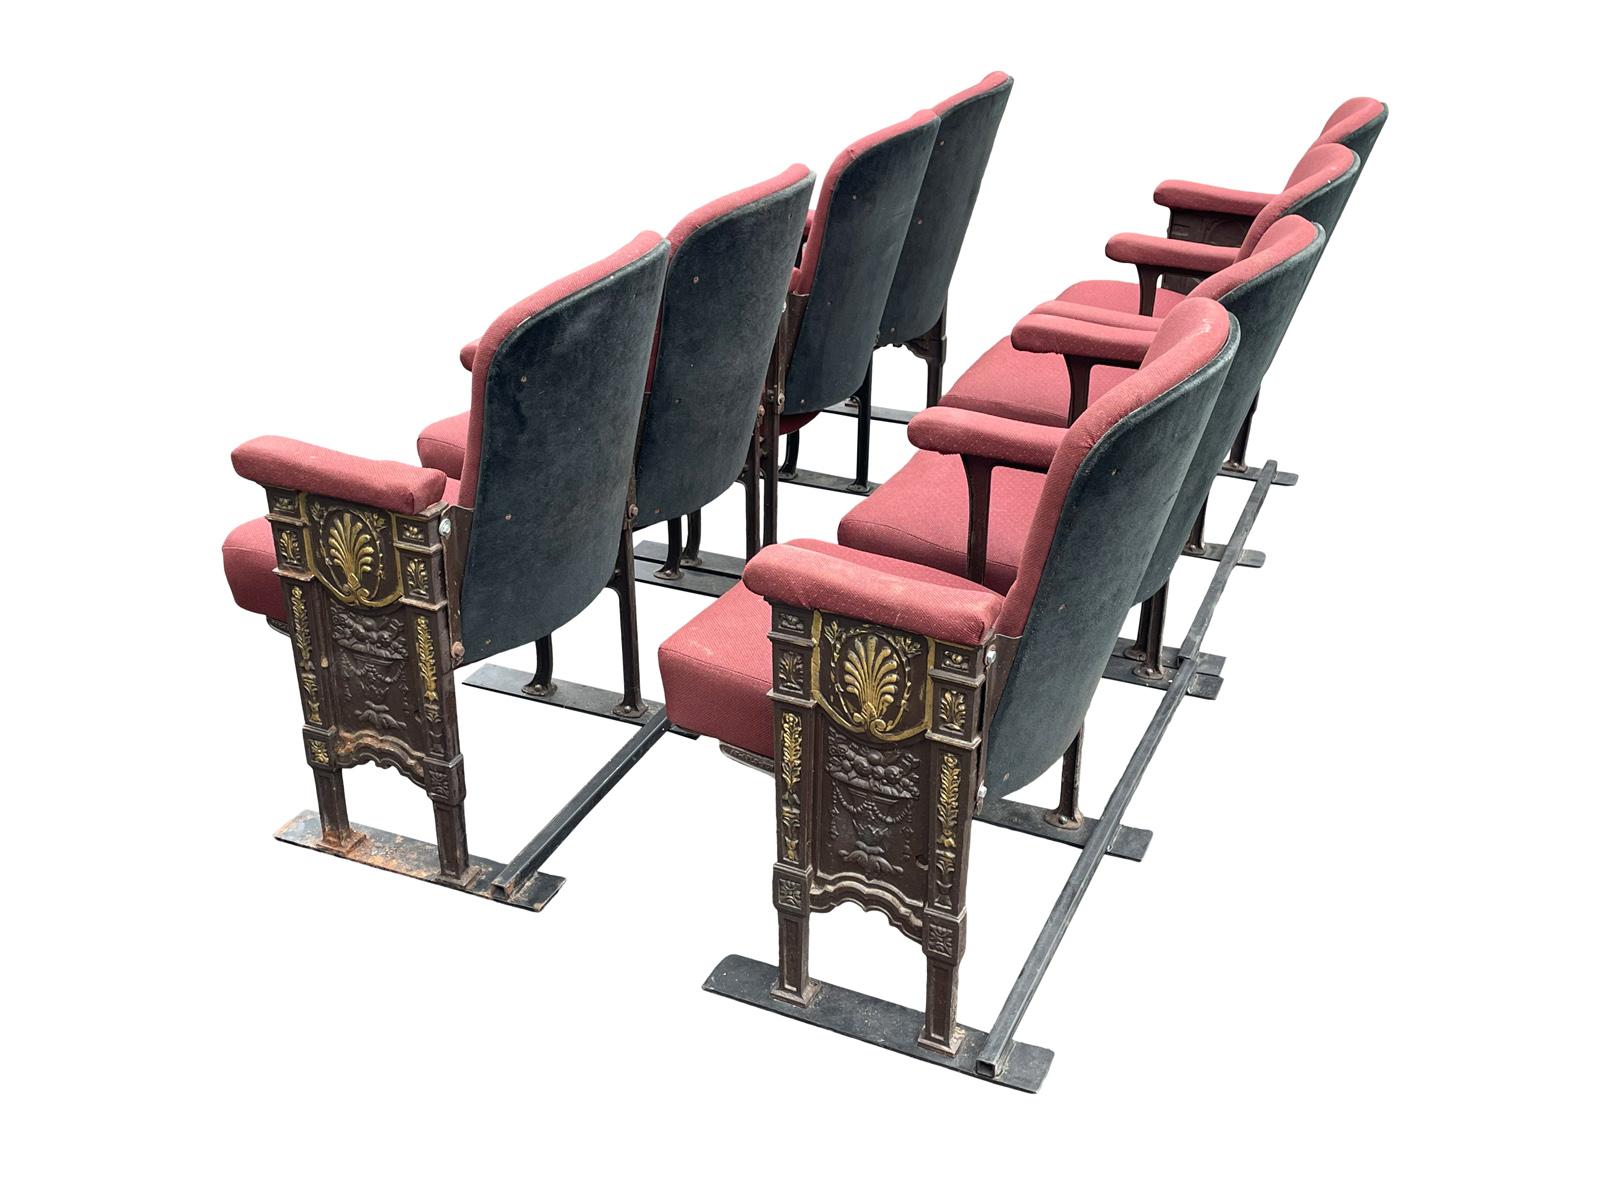 Original Studio54 Newyork Art Deco Theater Seat Bench Chairs For Sale 1